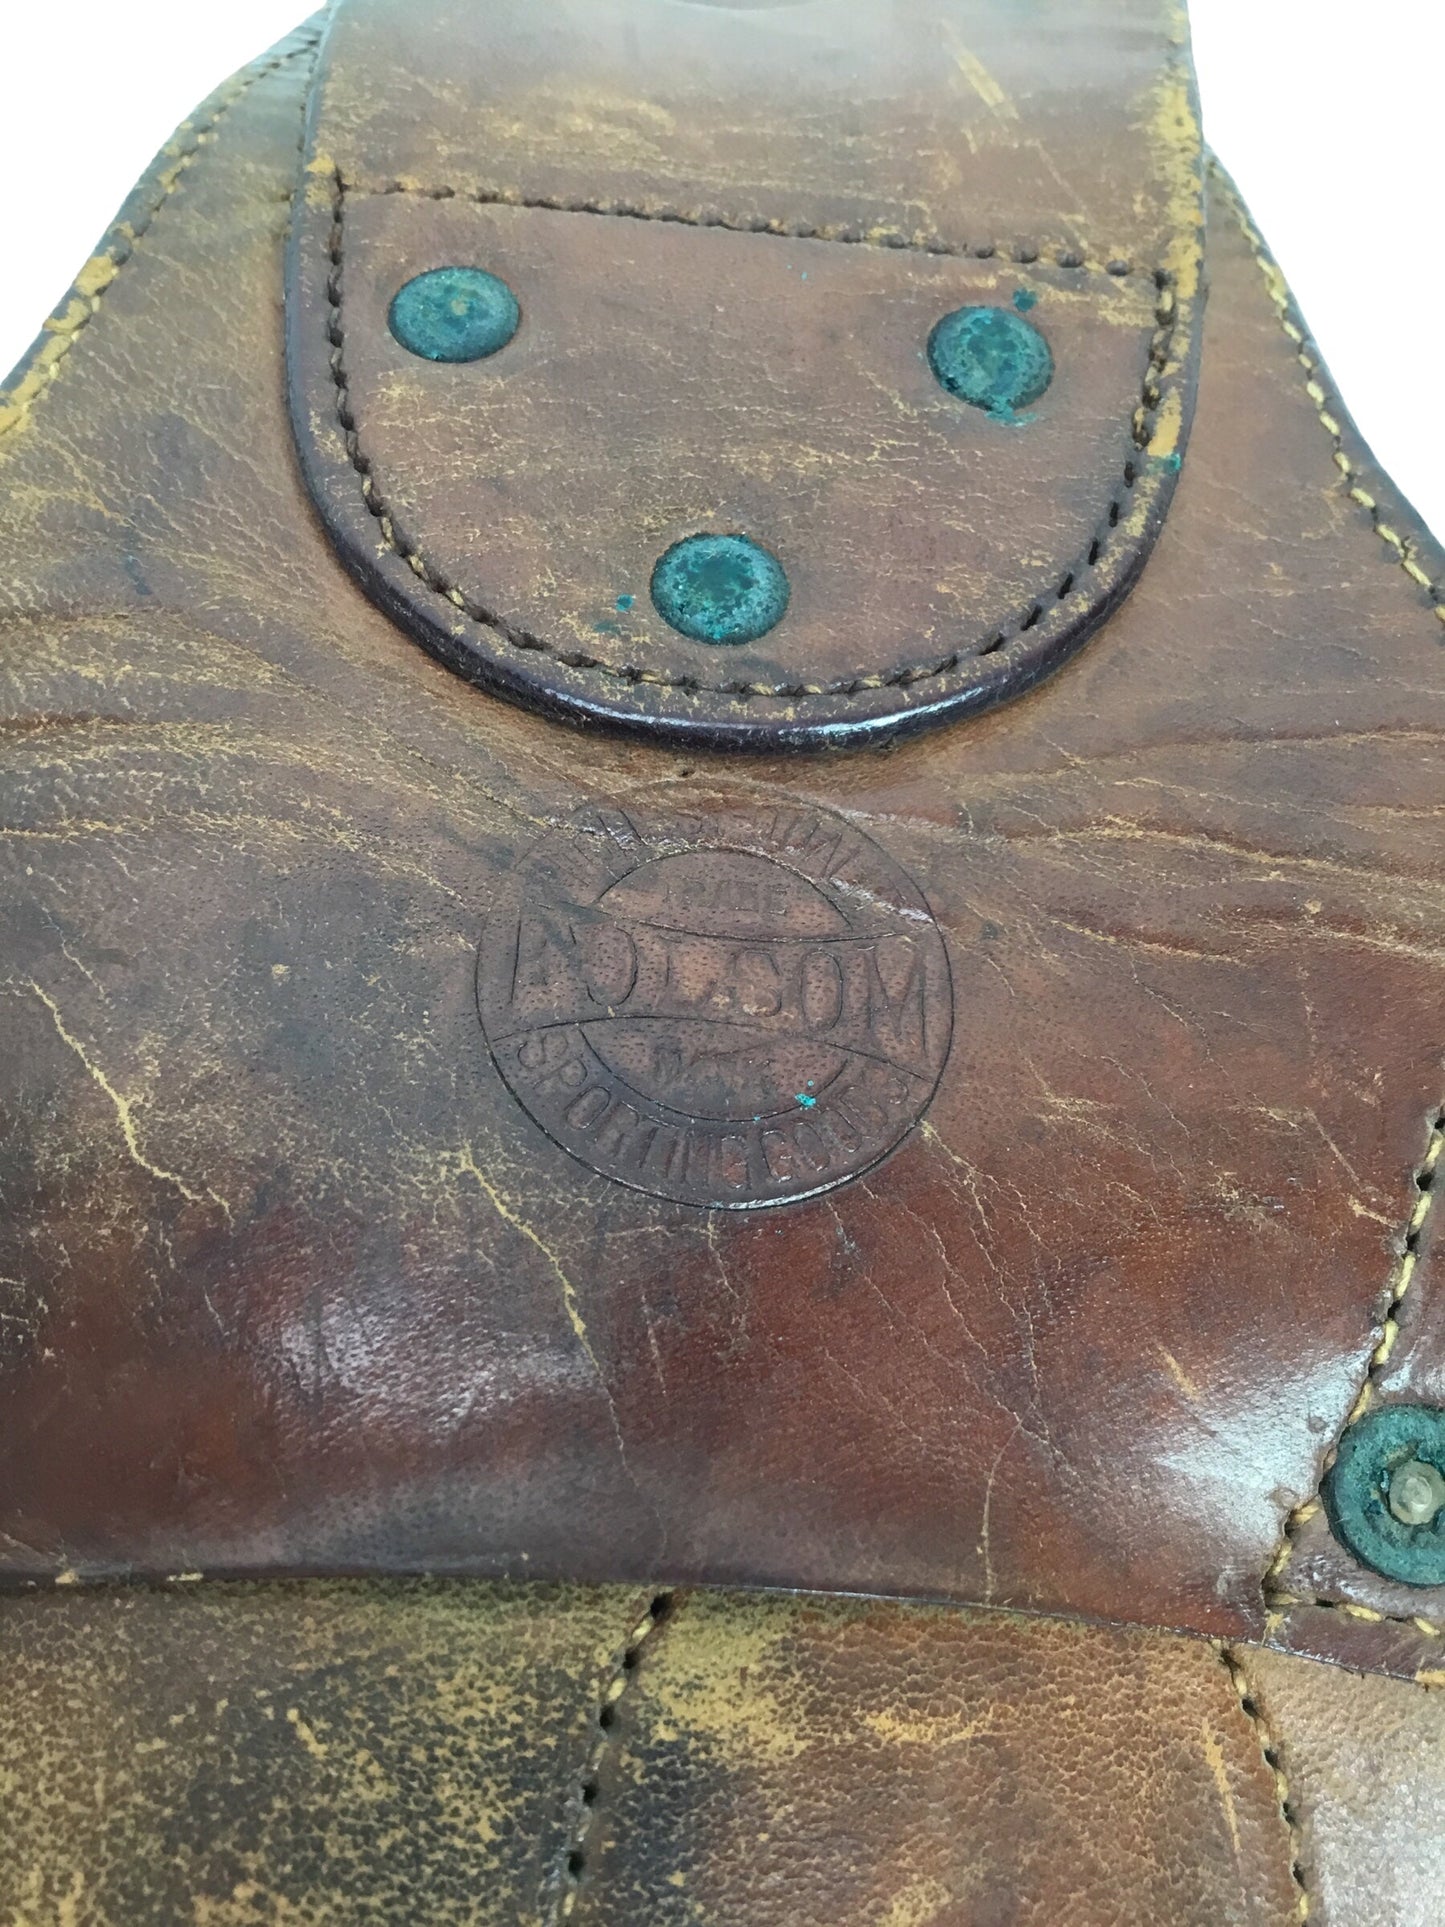 U.S. 1911 Leather Pistol Holster marked "Folsom Sporting Goods"